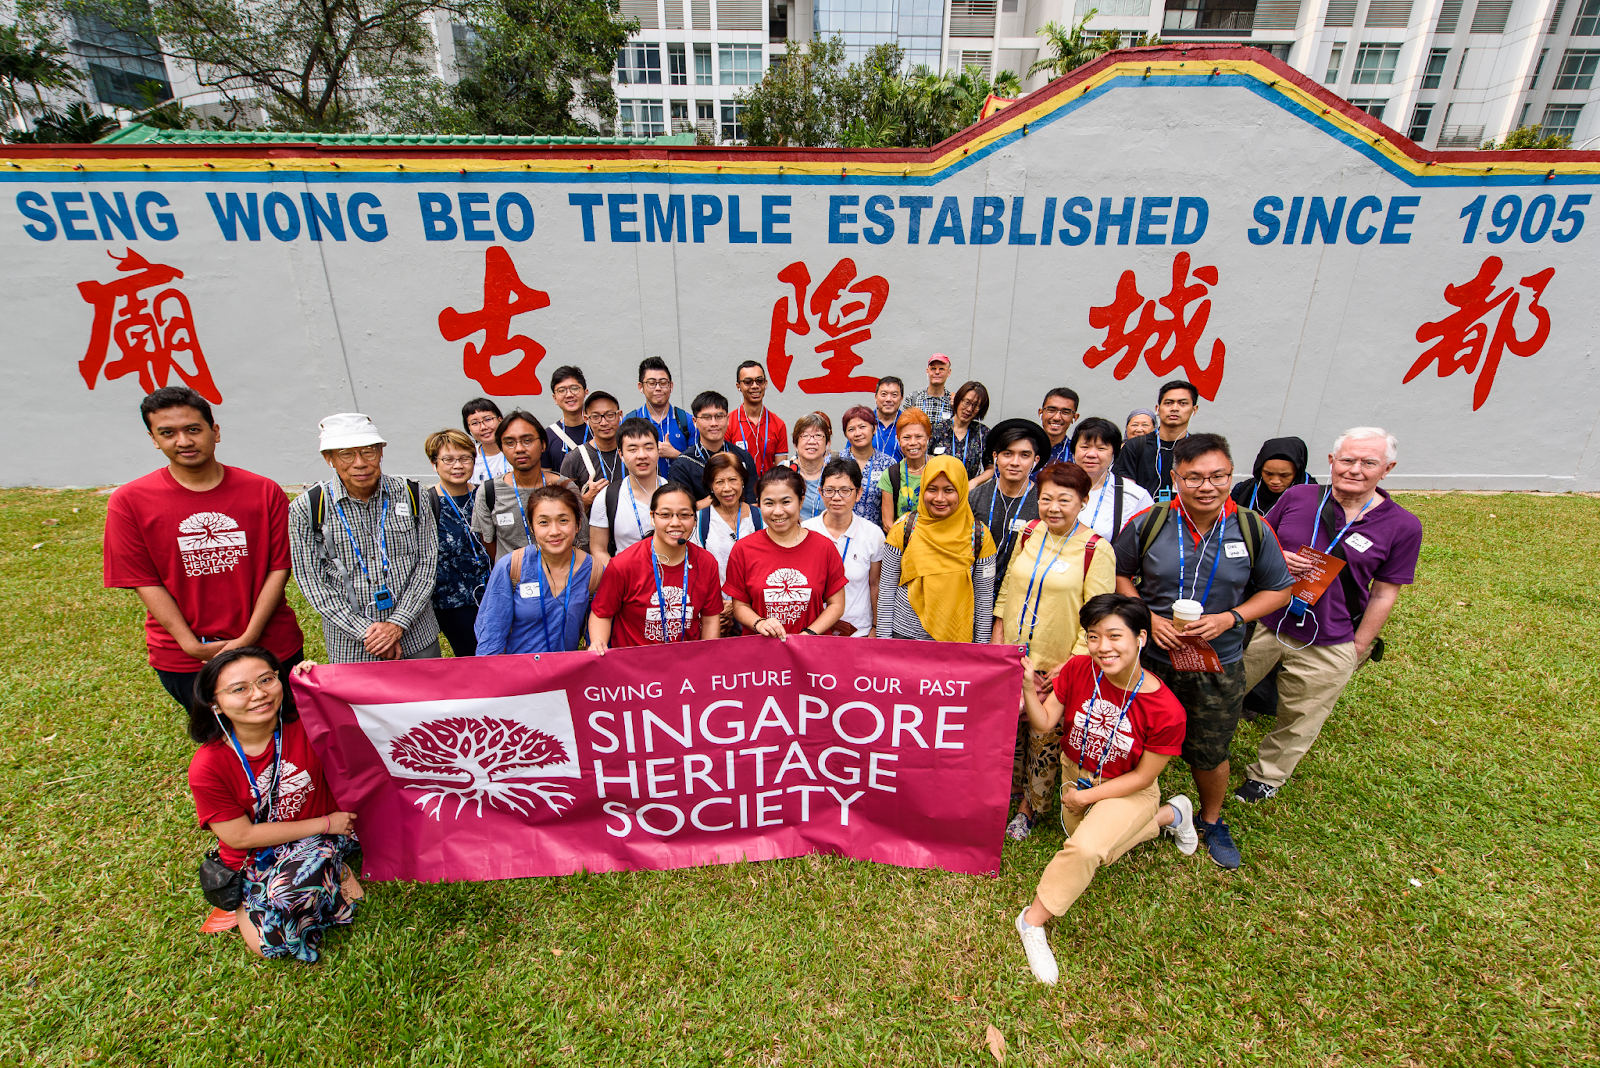 Singapore Heritage Society’s